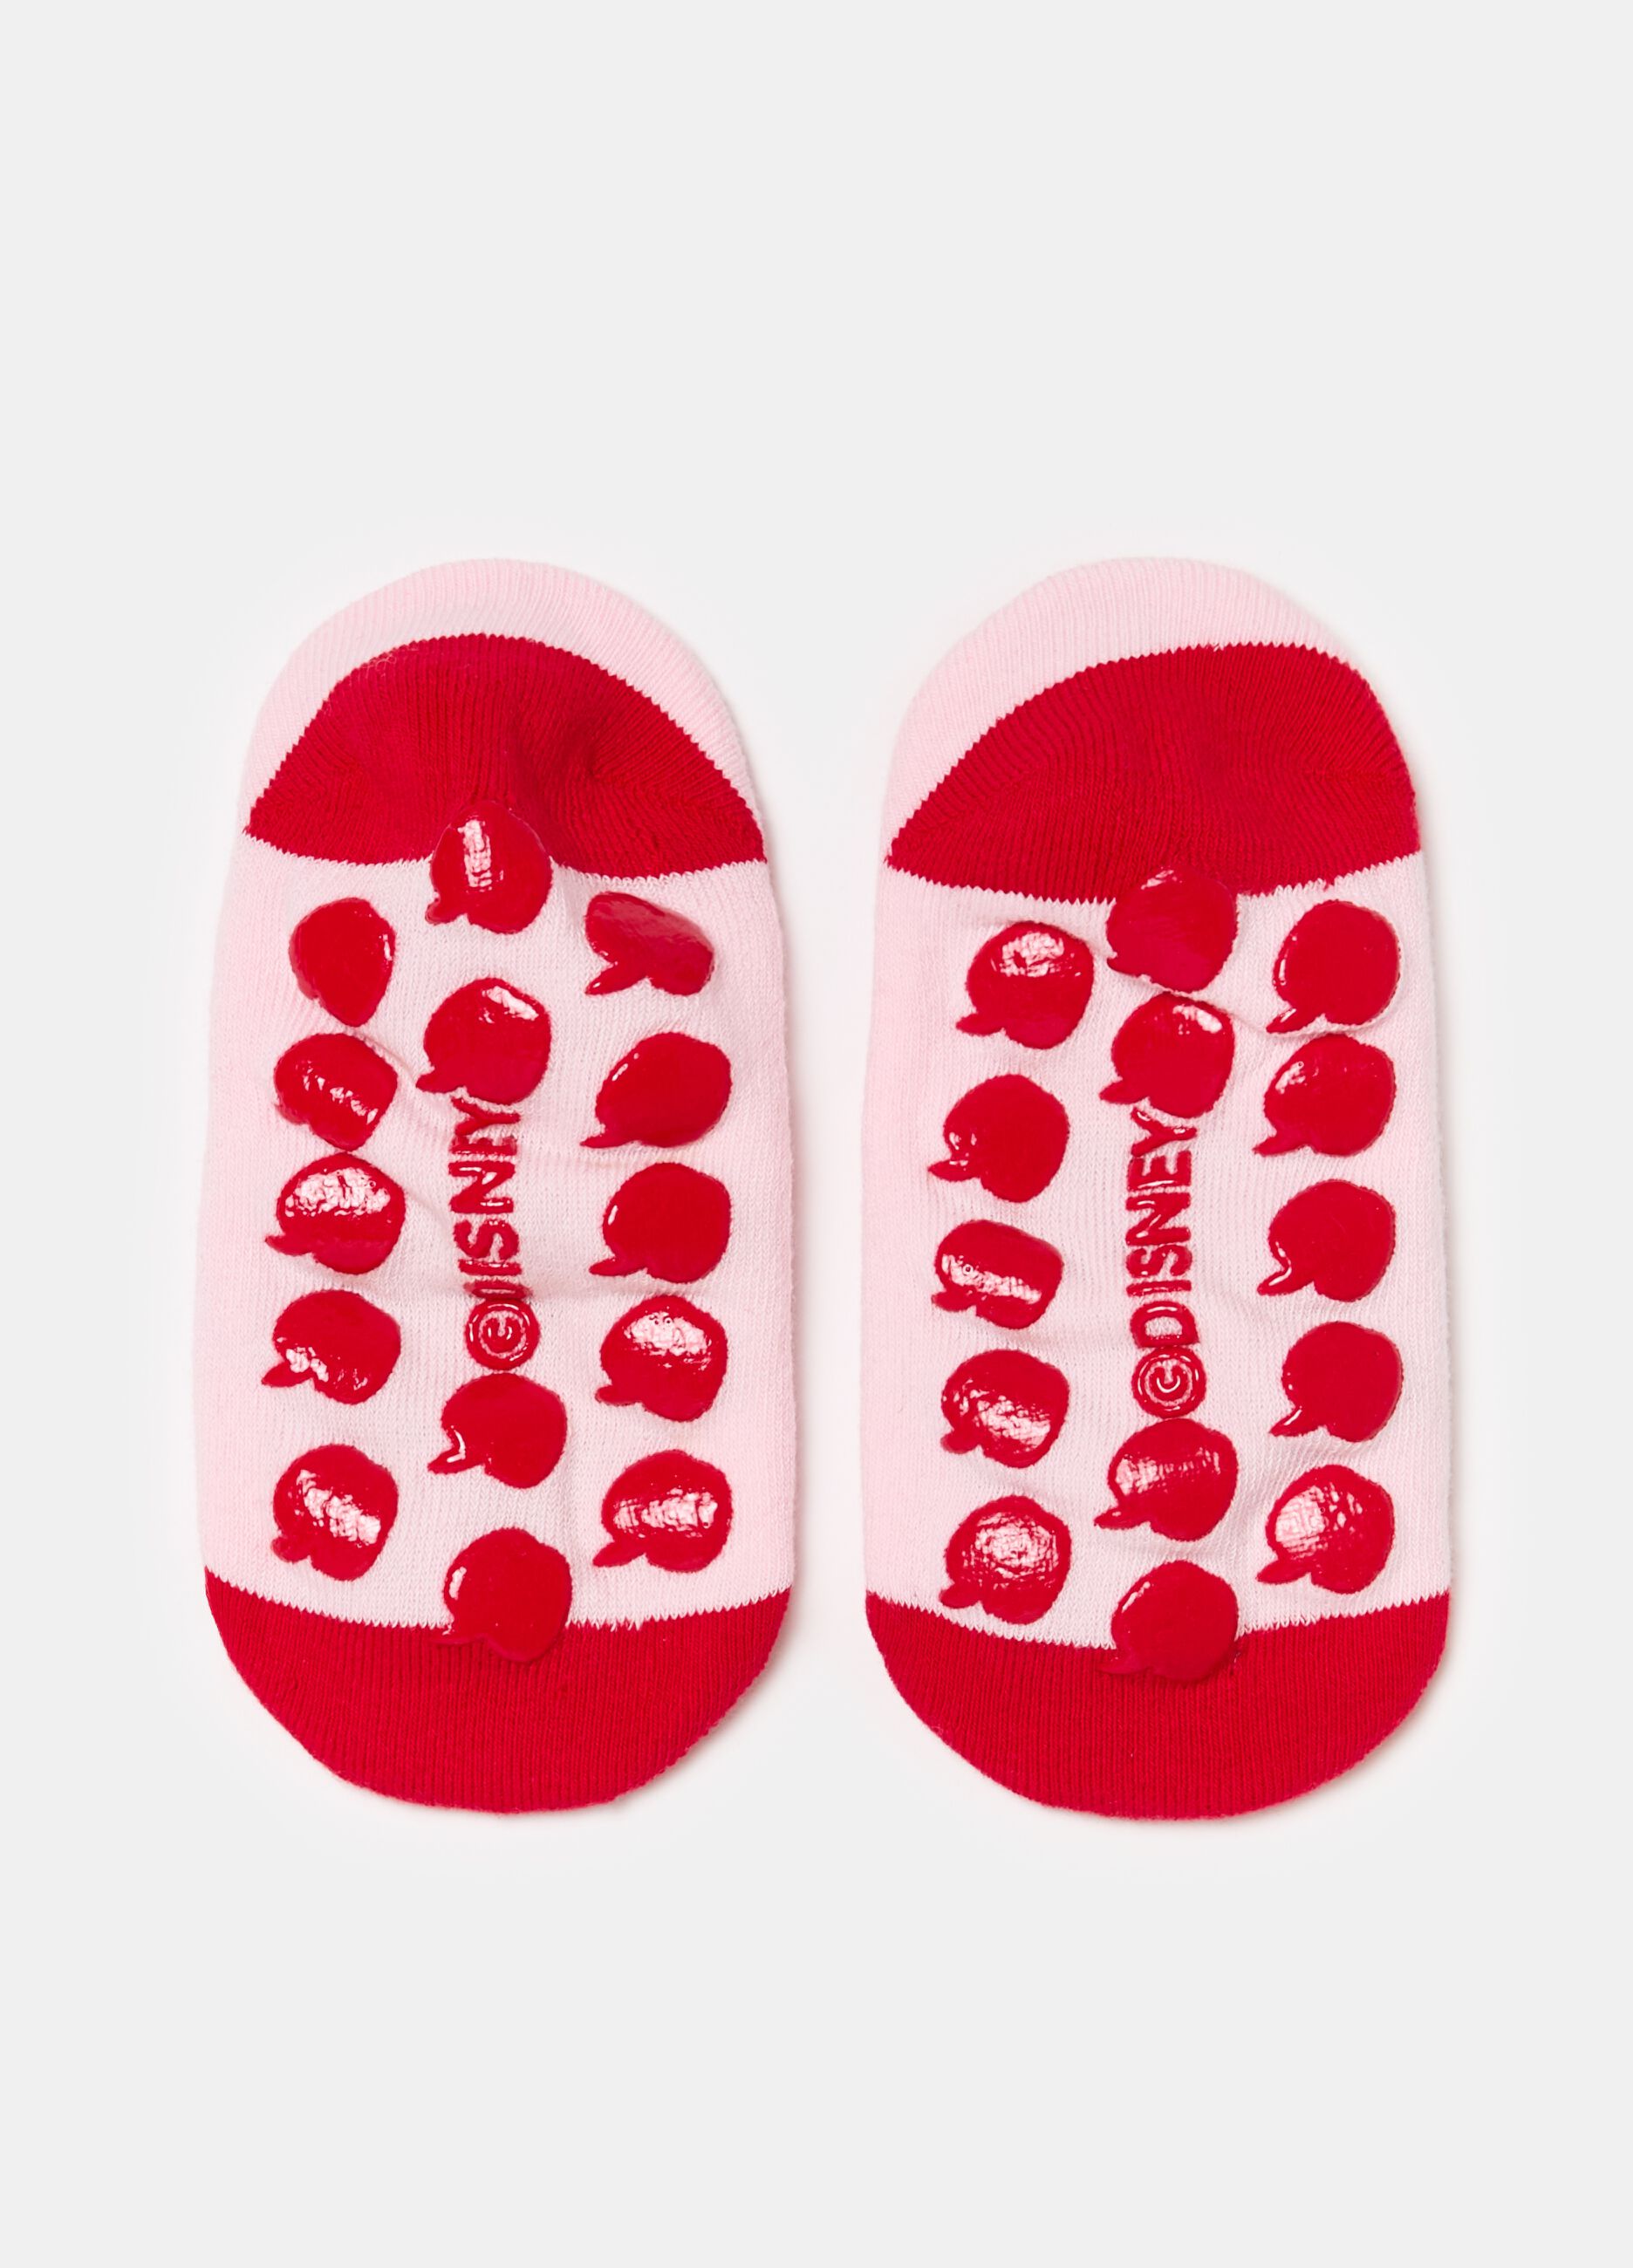 Snow White slipper socks in organic cotton